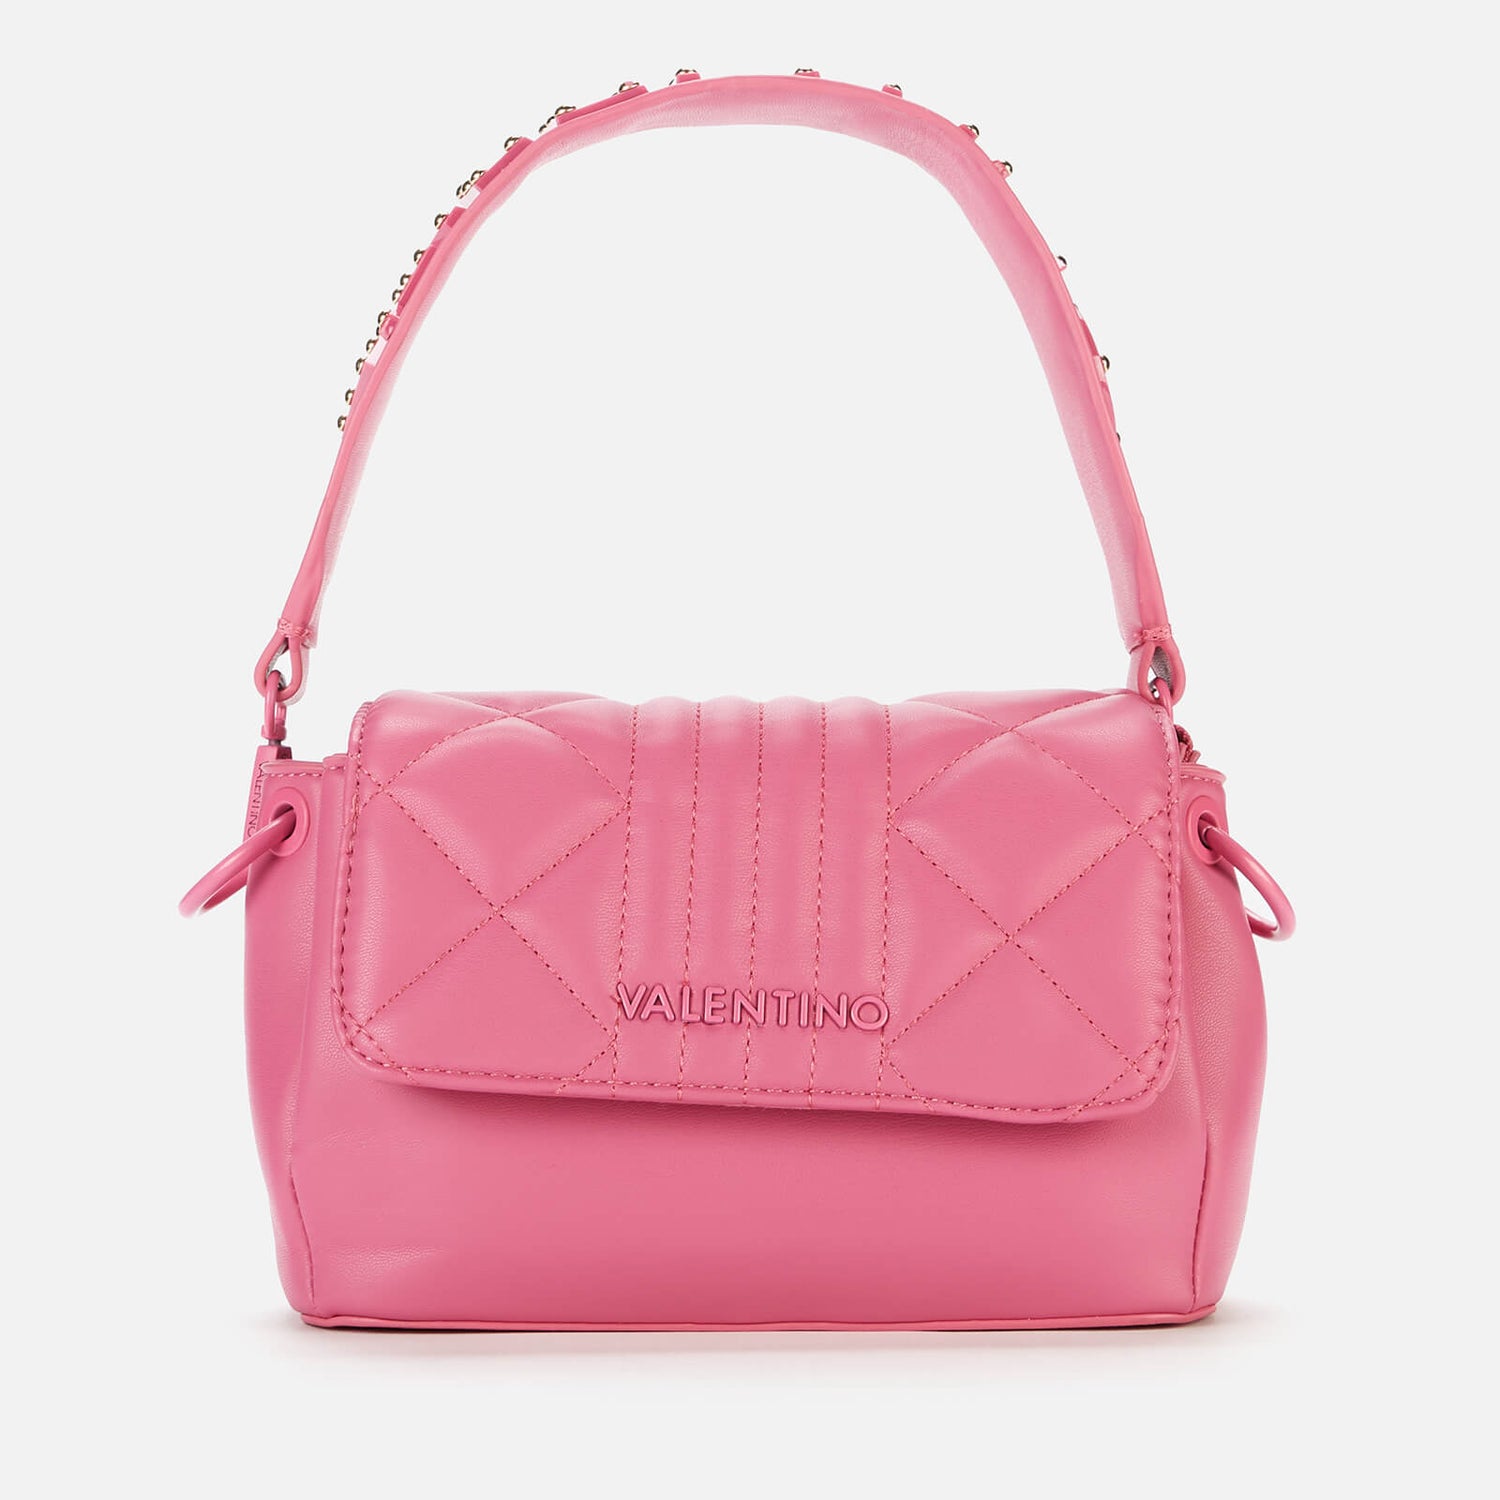 Valentino Bags Women's Soda Shoulder Bag - Pink